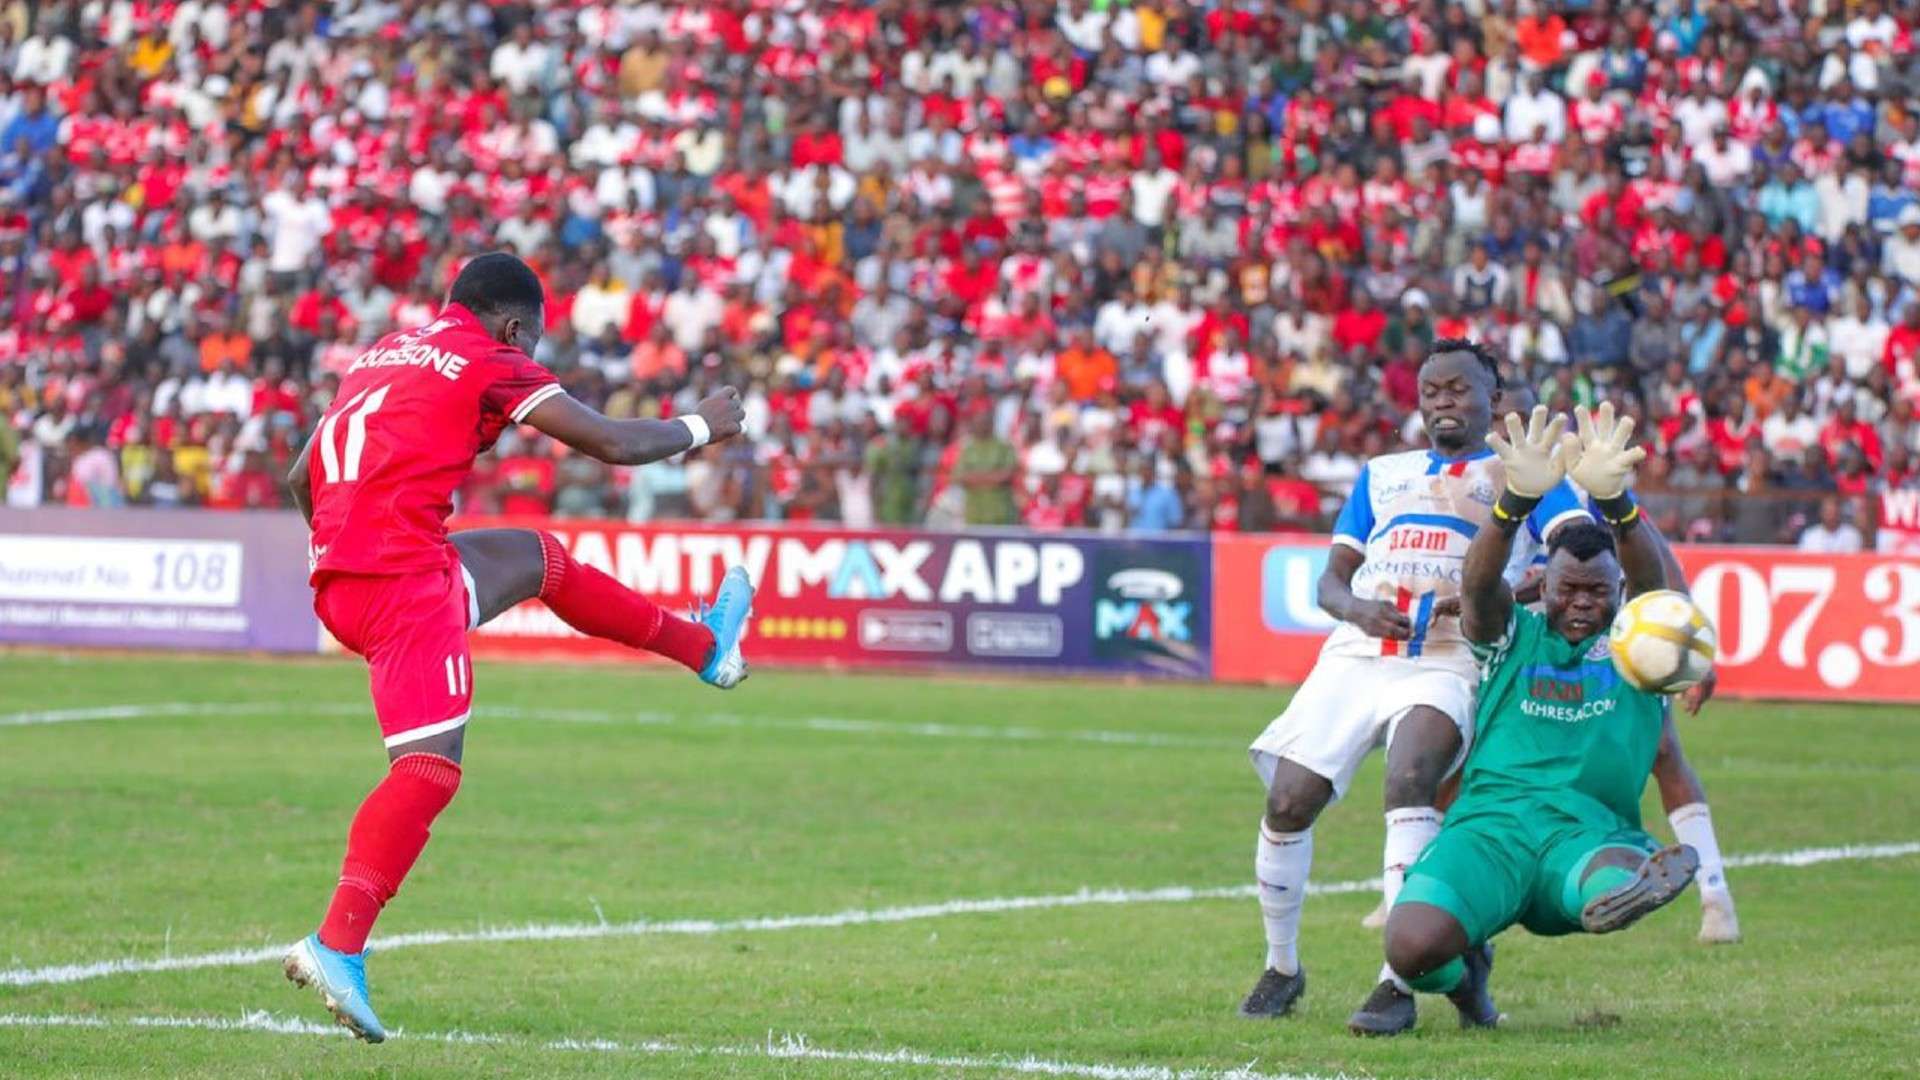 Simba SC player Luis Miquissone scores past Mathews Kigonya of Azam FC.